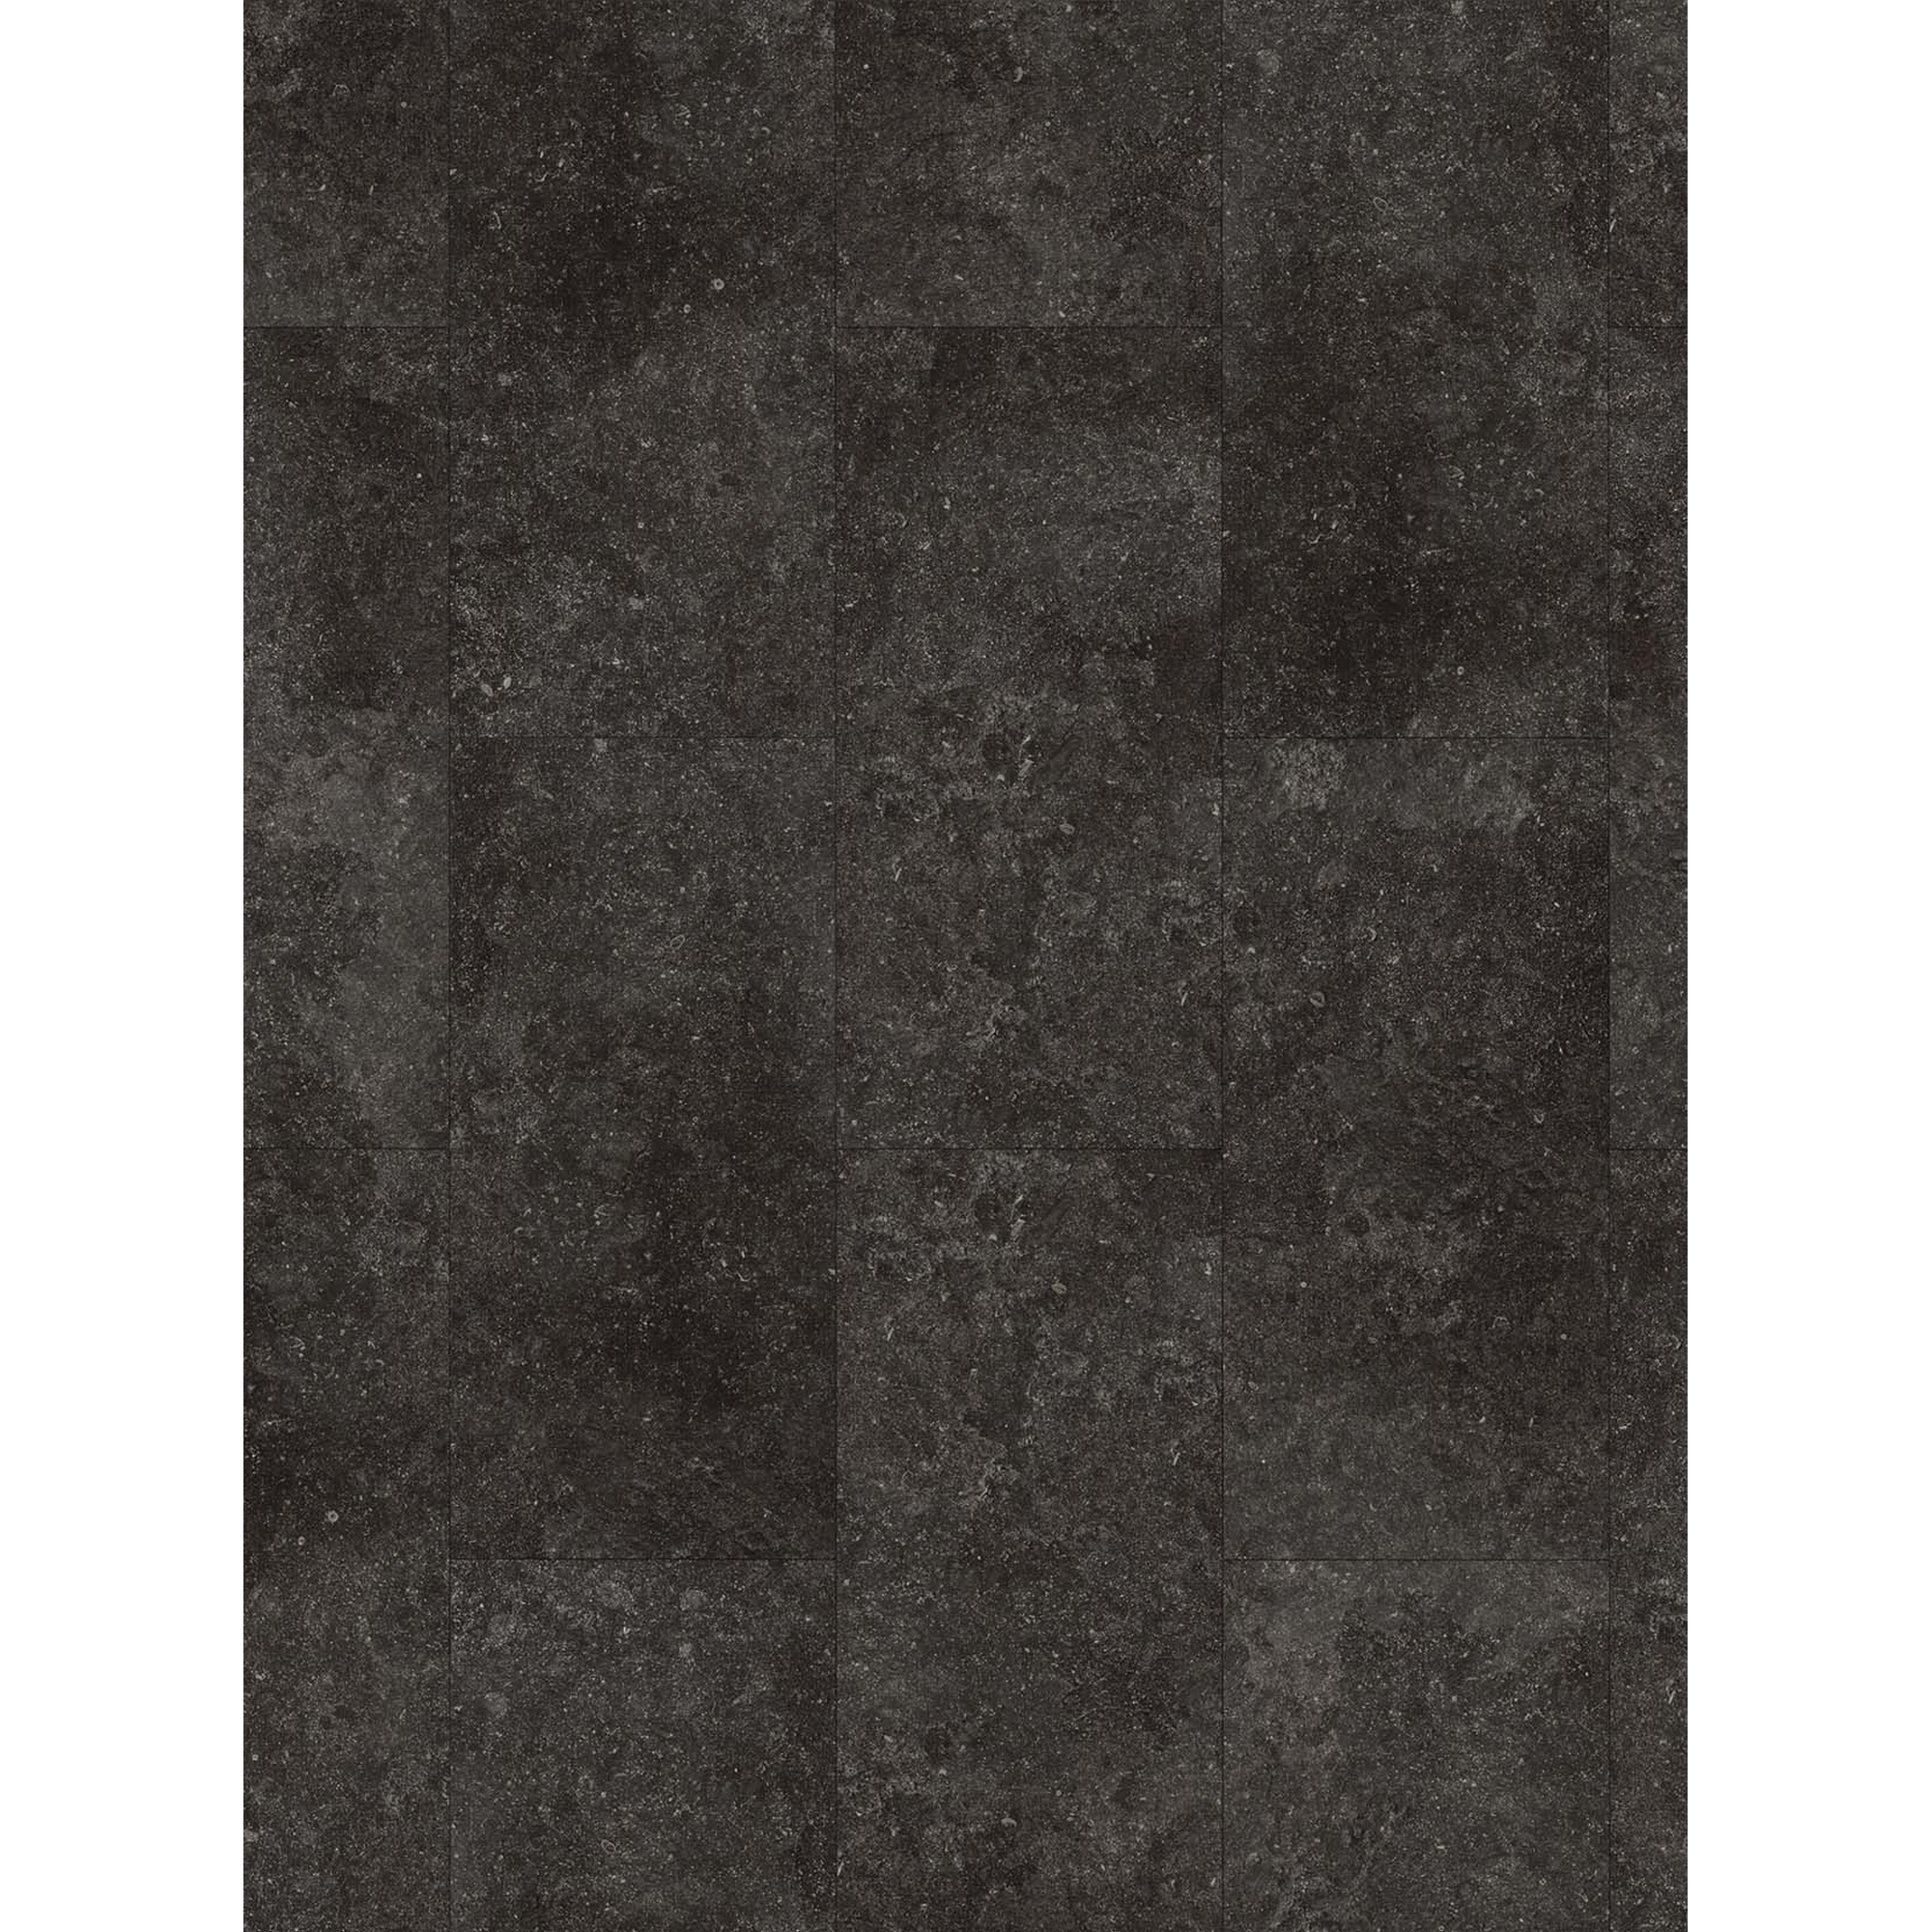 Vinylboden 'Modular ONE' Granit anthrazit 8 mm + product picture